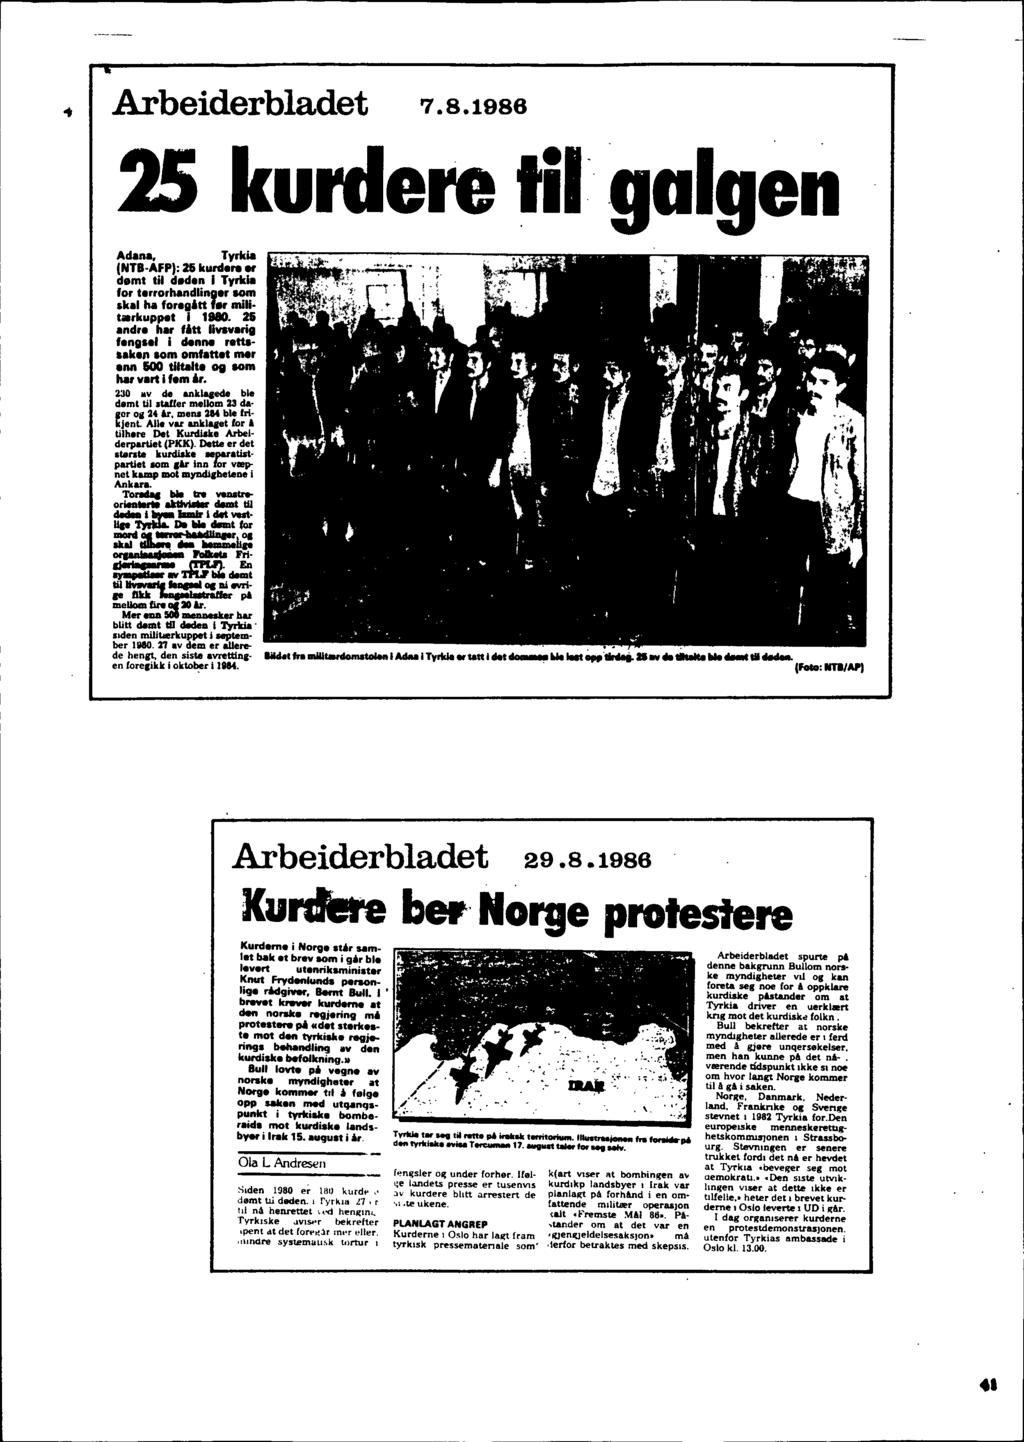 .. Arbeiderbladet 7.8.1986 25 kurdere Iii galgen Adana, Tyrkia (NTB-AFP): 2fj kurdare er demt til ded.n I Tyrkia fo, tarrorhandlinlla, lofii skai ha for'iia" fe, milit.,kuppet I 1880.